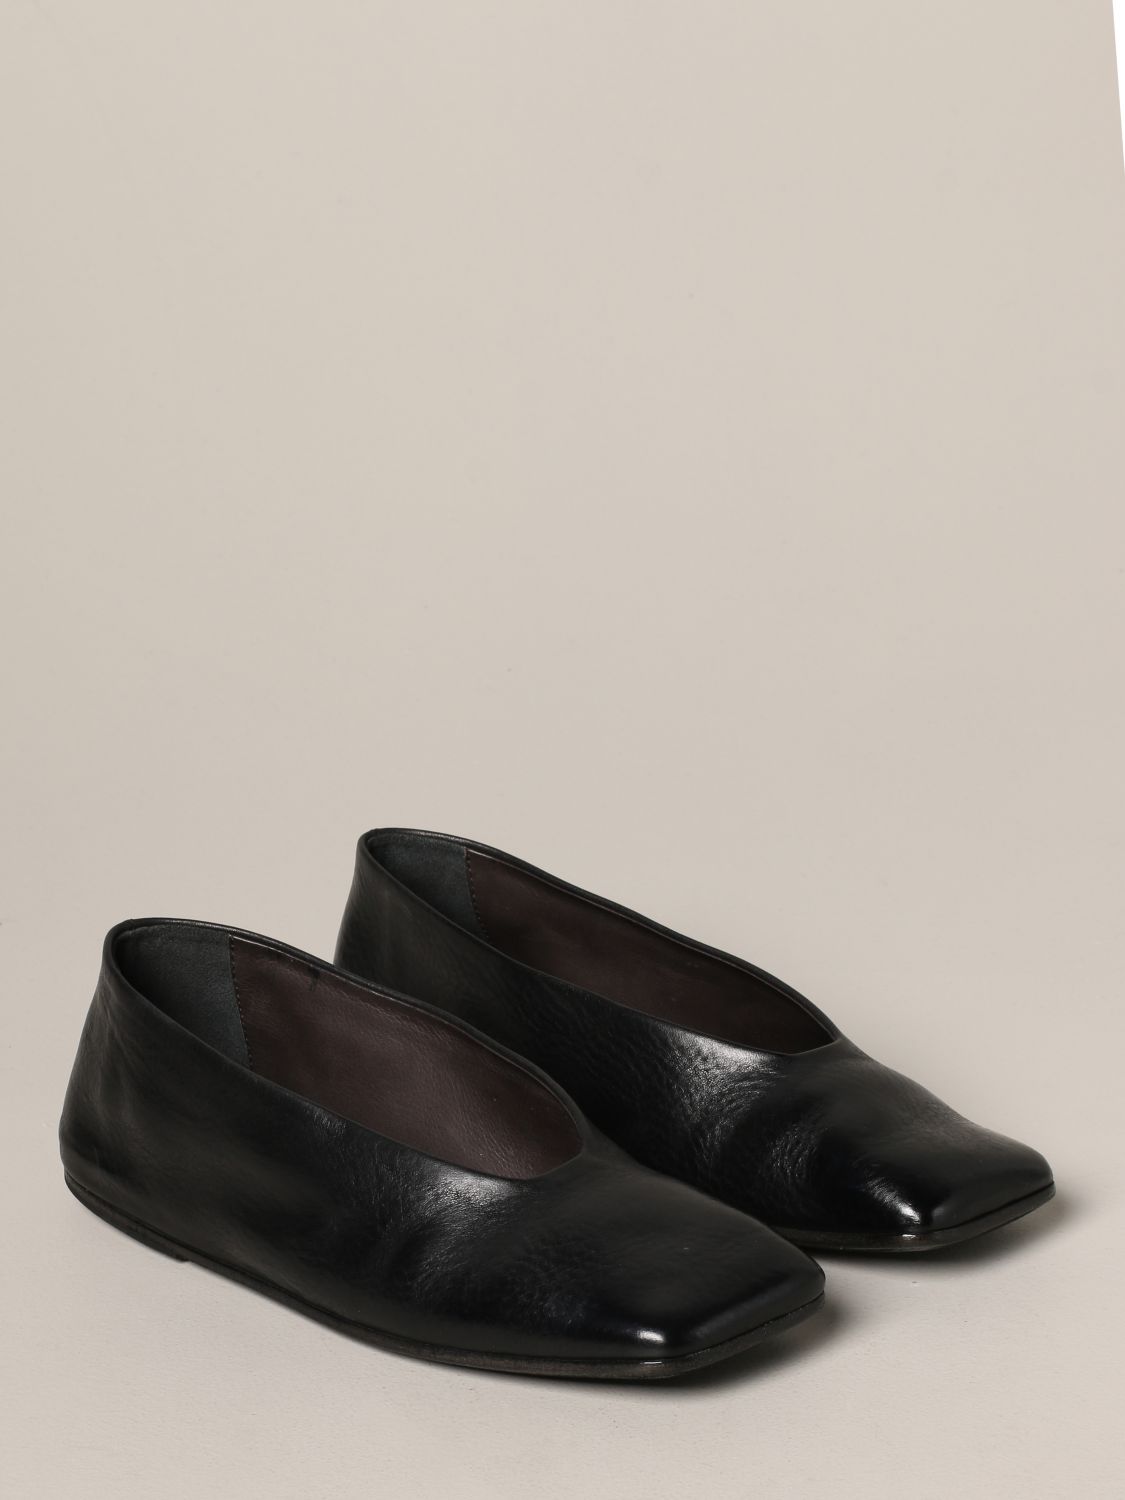 芭蕾平底鞋 Marsèll: Marsell spatolona 芭蕾舞鞋 黑色 2